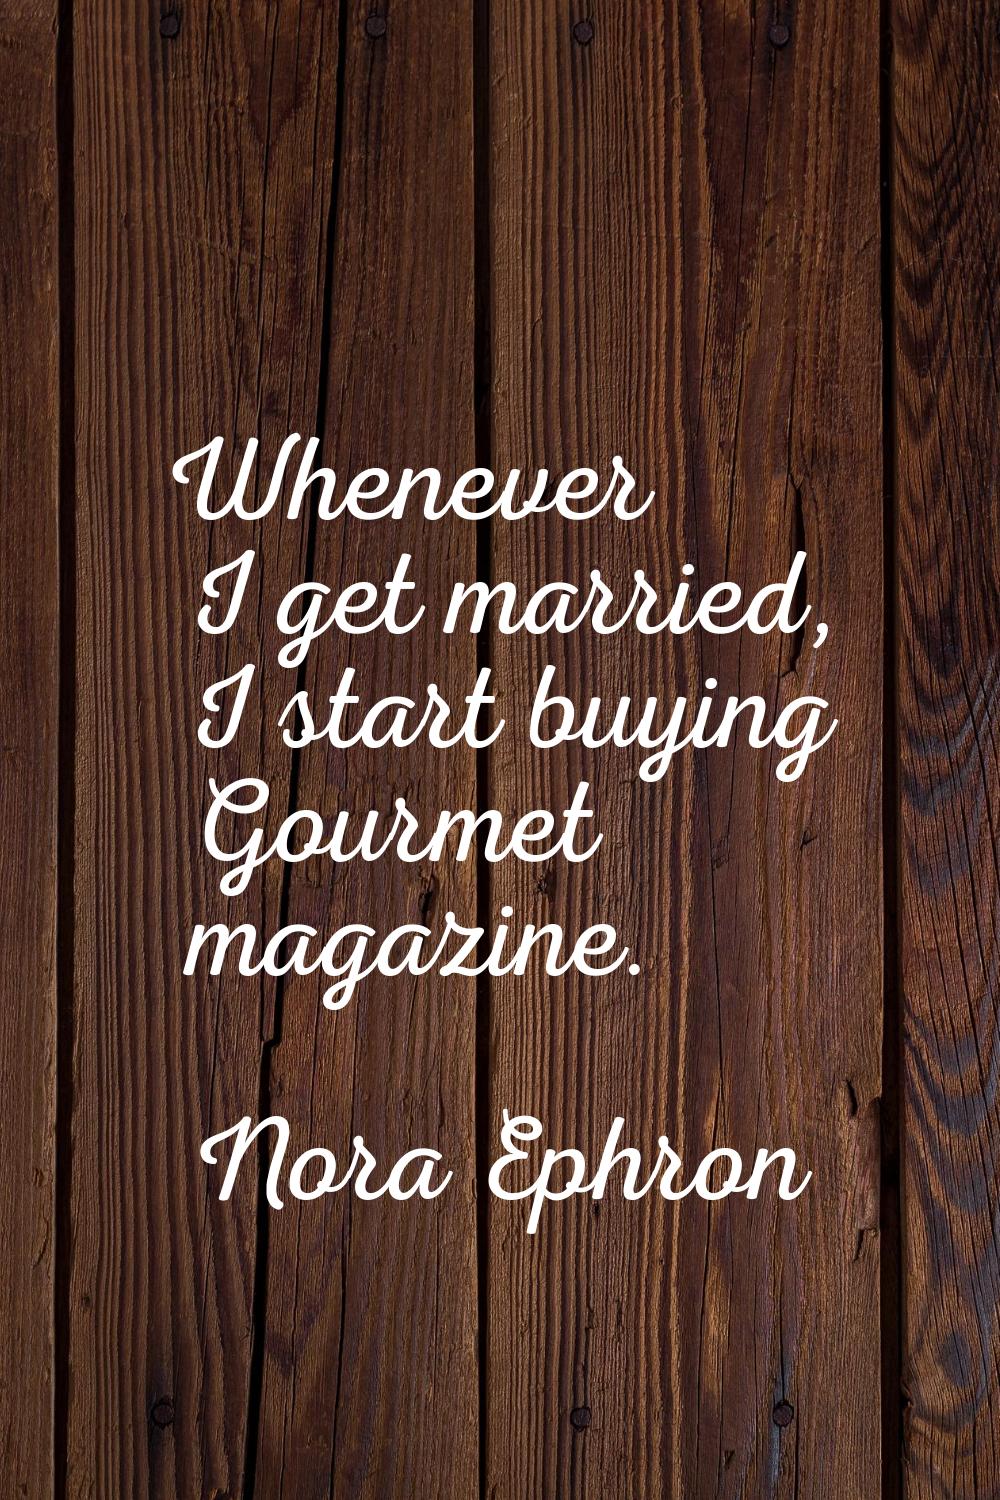 Whenever I get married, I start buying Gourmet magazine.